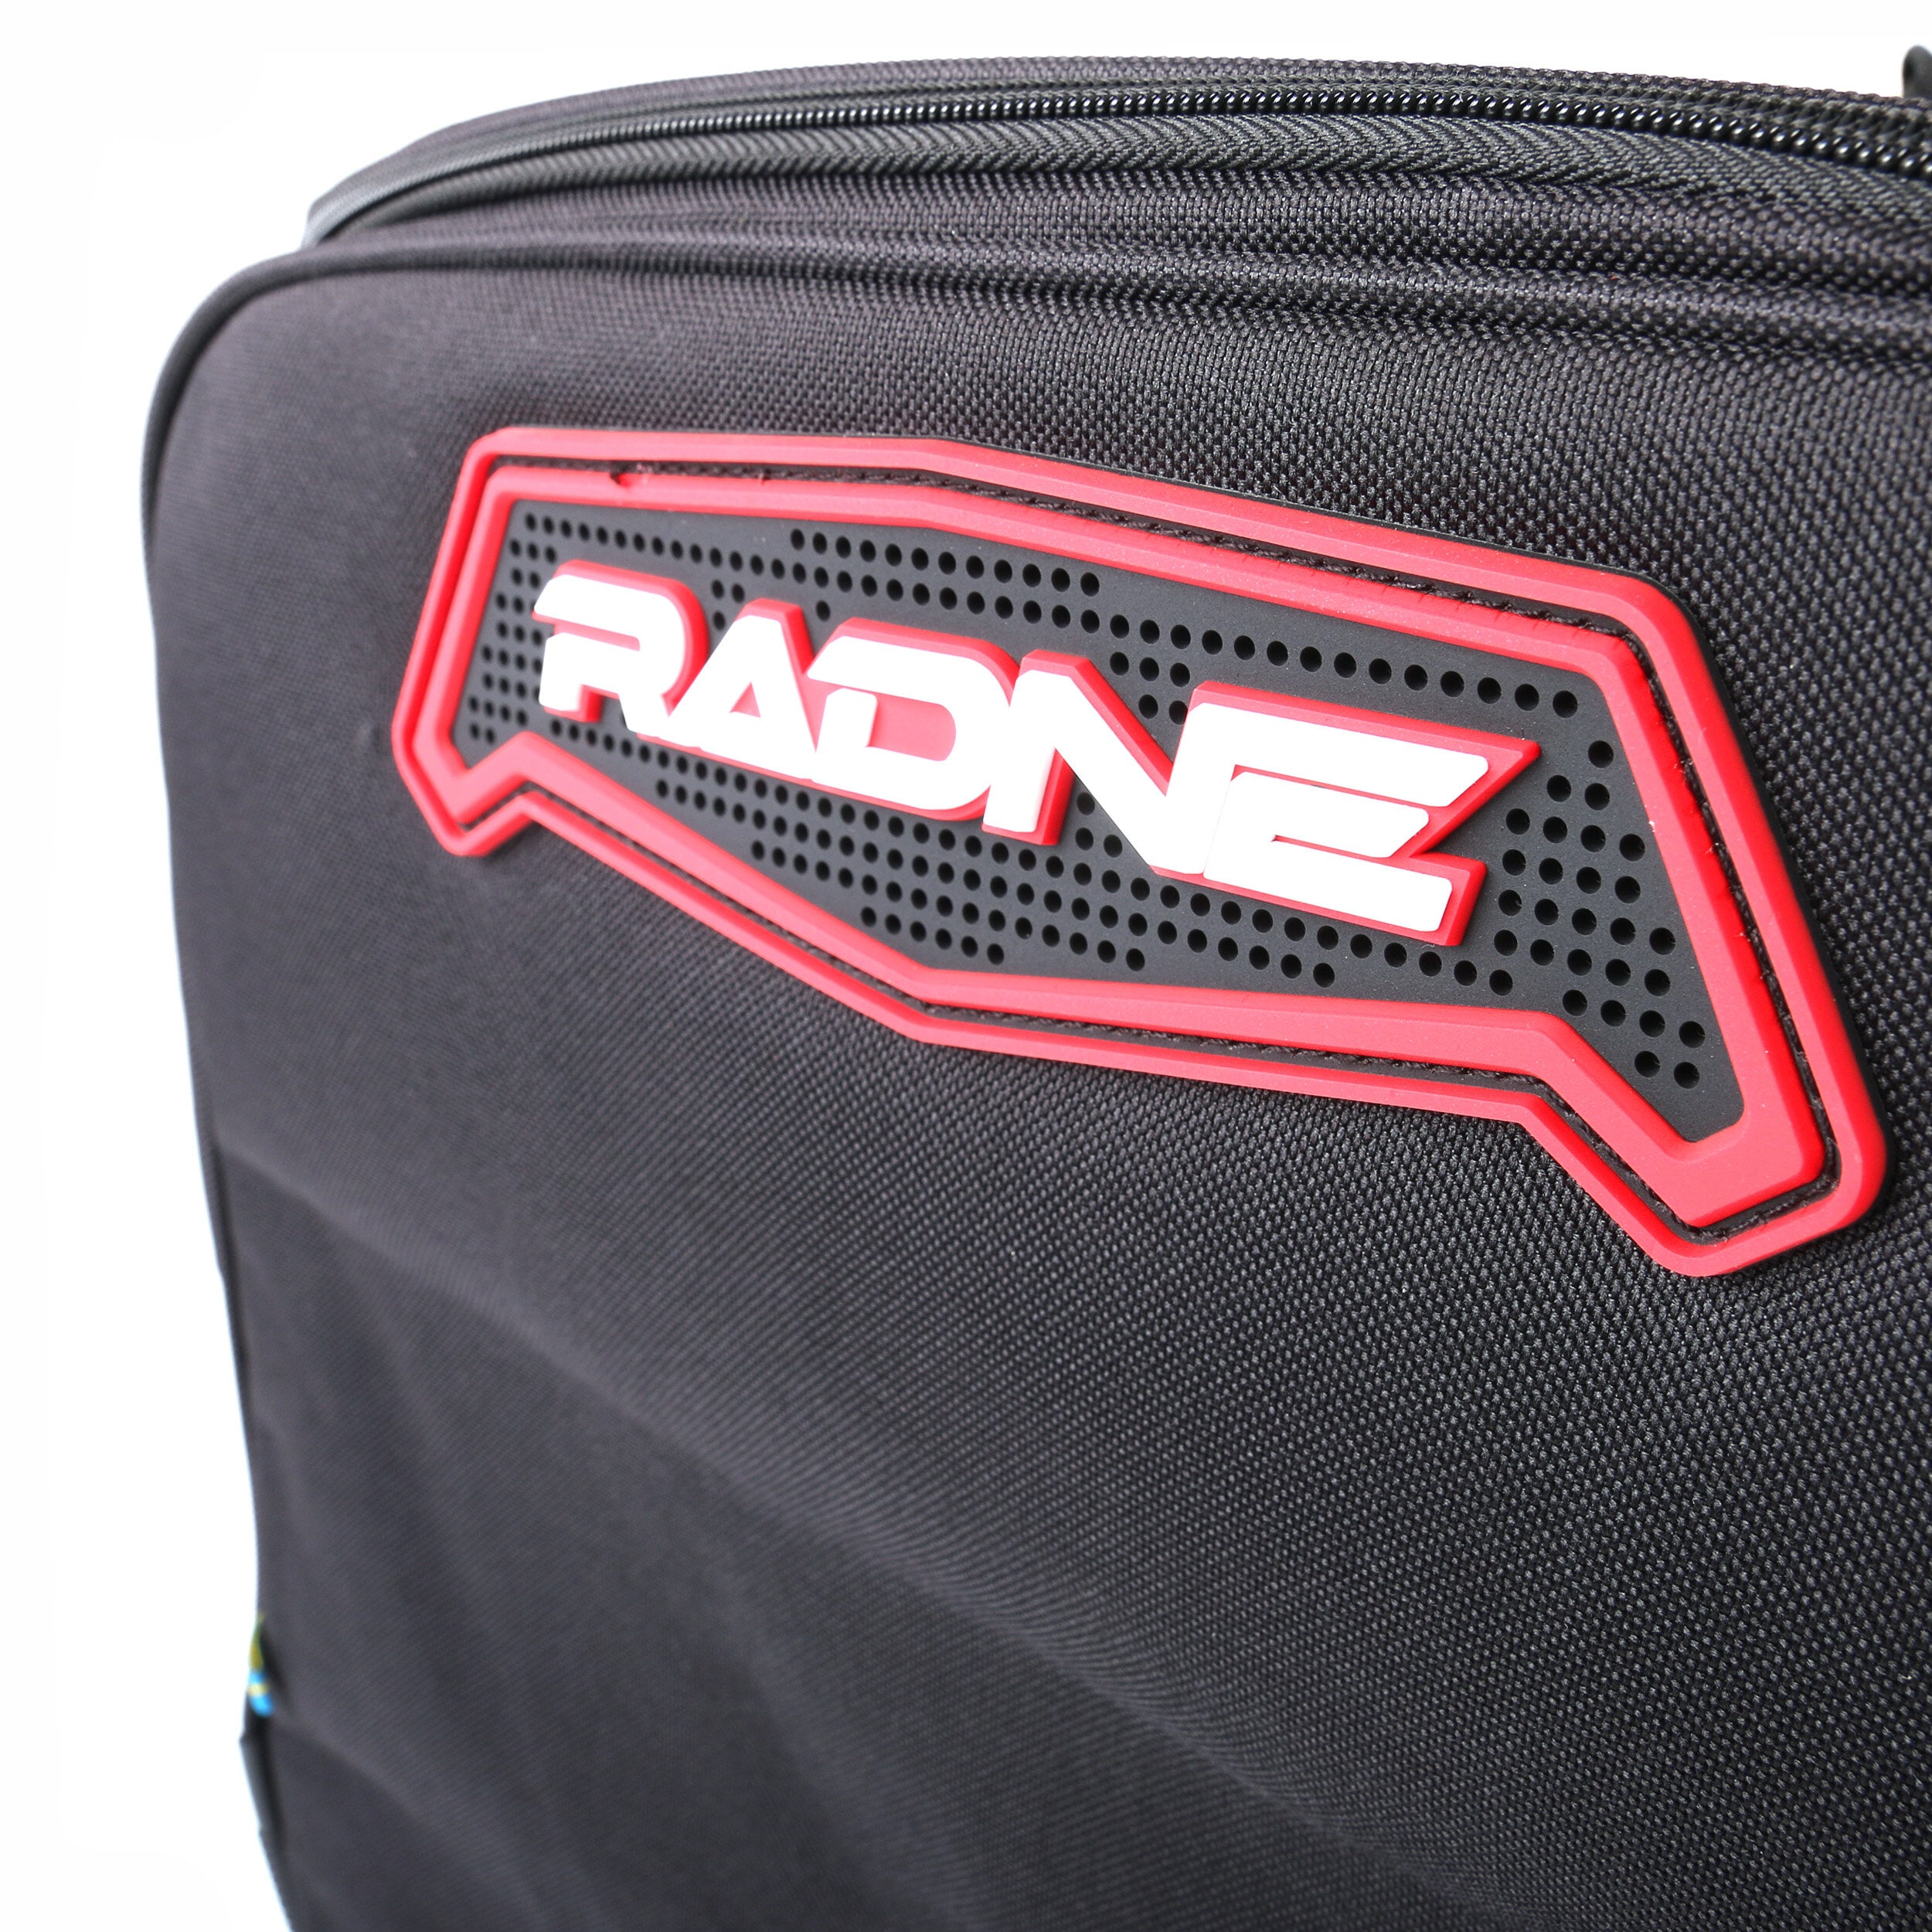 Radne Racing Gear Bag